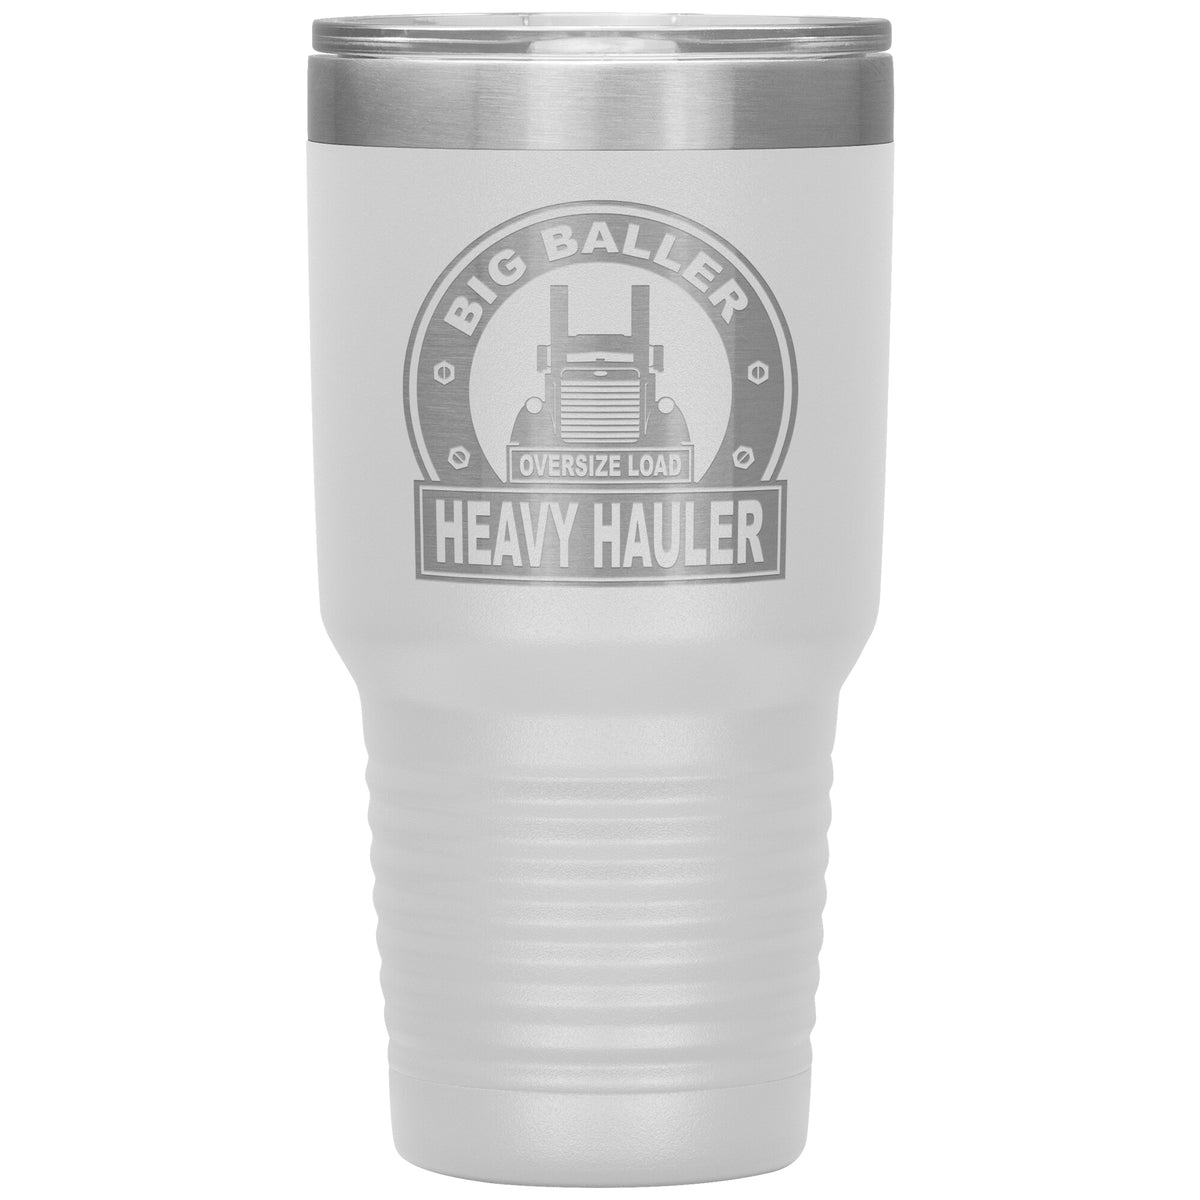 Big Baller Heavy Hauler - Pete - 30oz Tumbler - Free Shipping